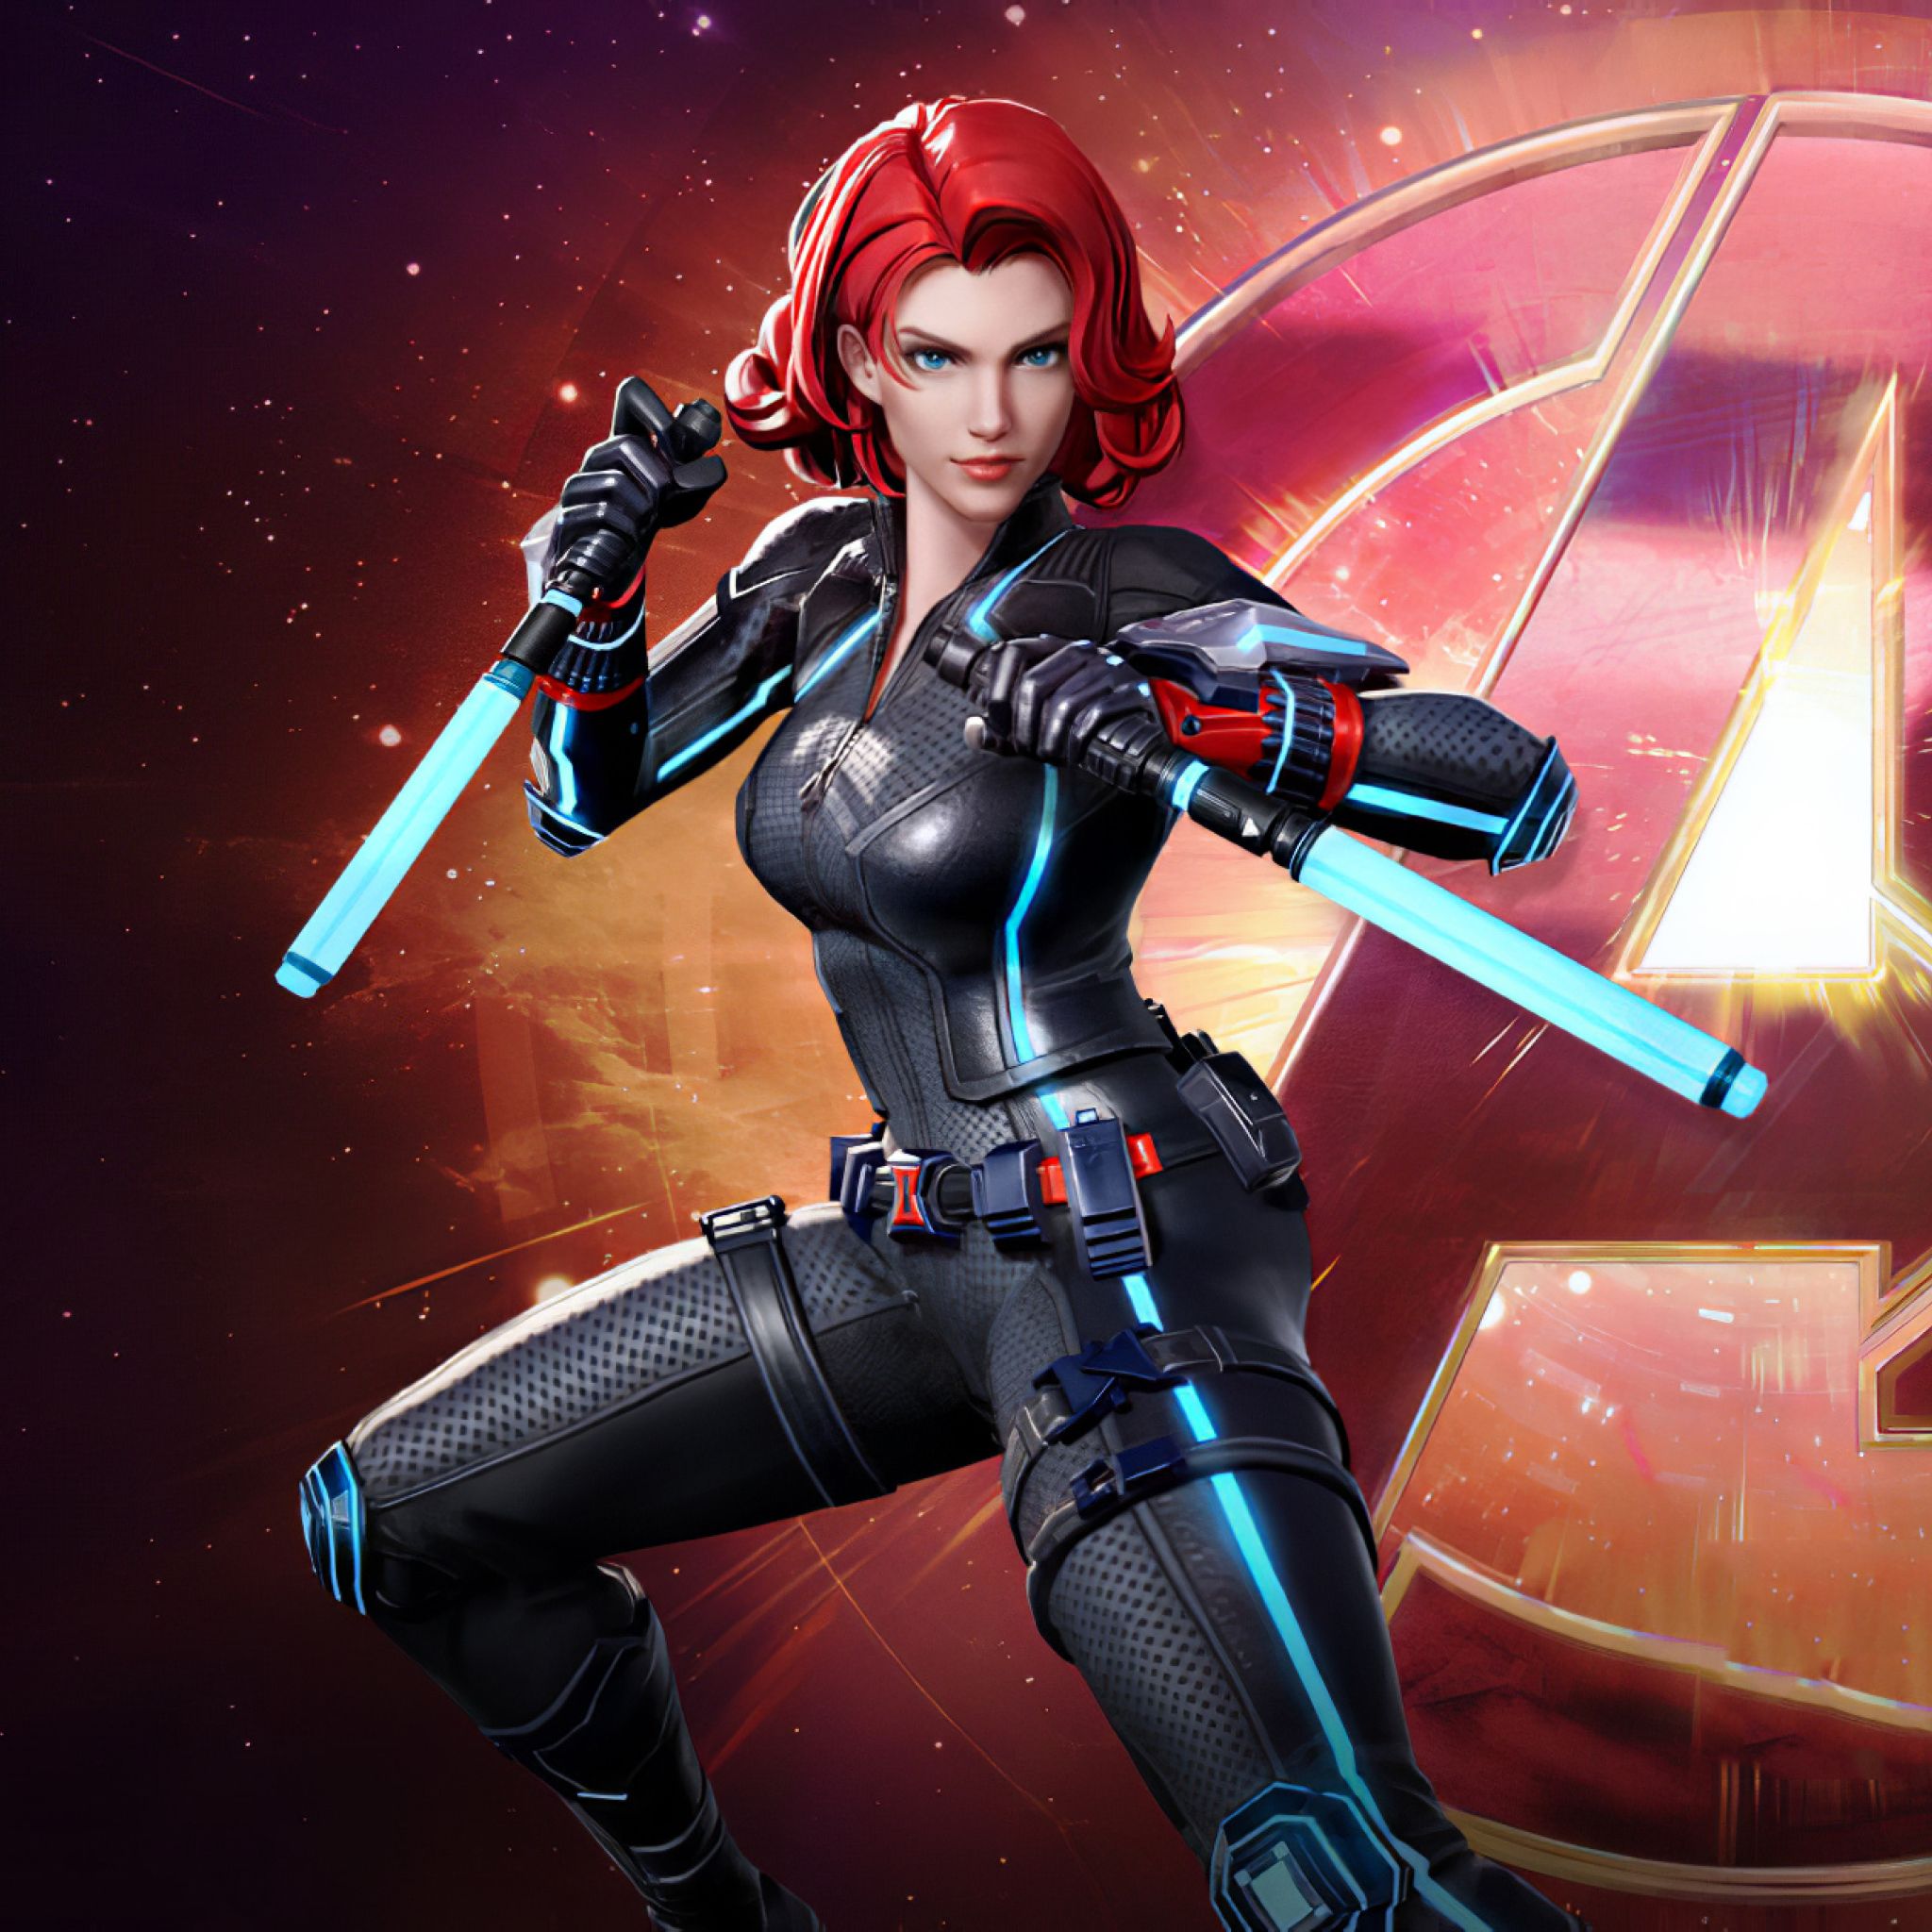 Black Widow MARVEL Super War iPad Air Wallpaper, HD Games 4K Wallpaper, Image, Photo and Background